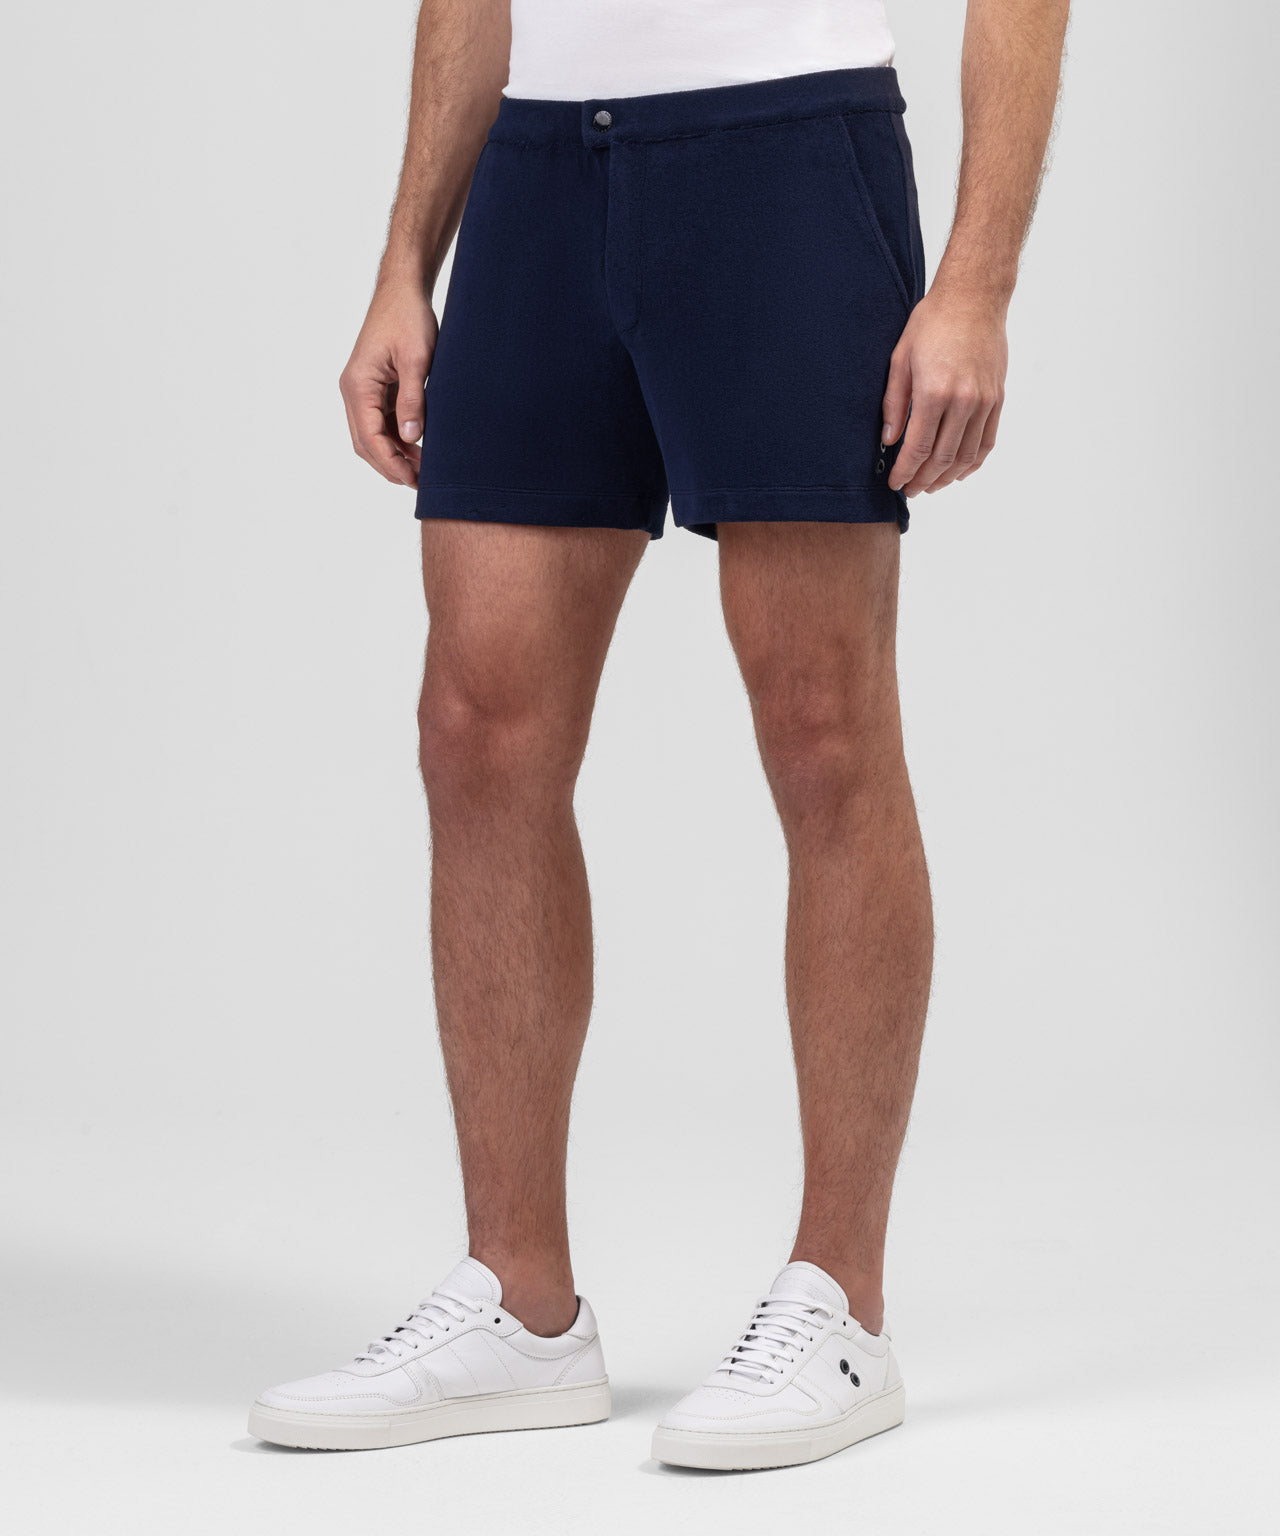 Cotton Terry Tennis Shorts: Navy